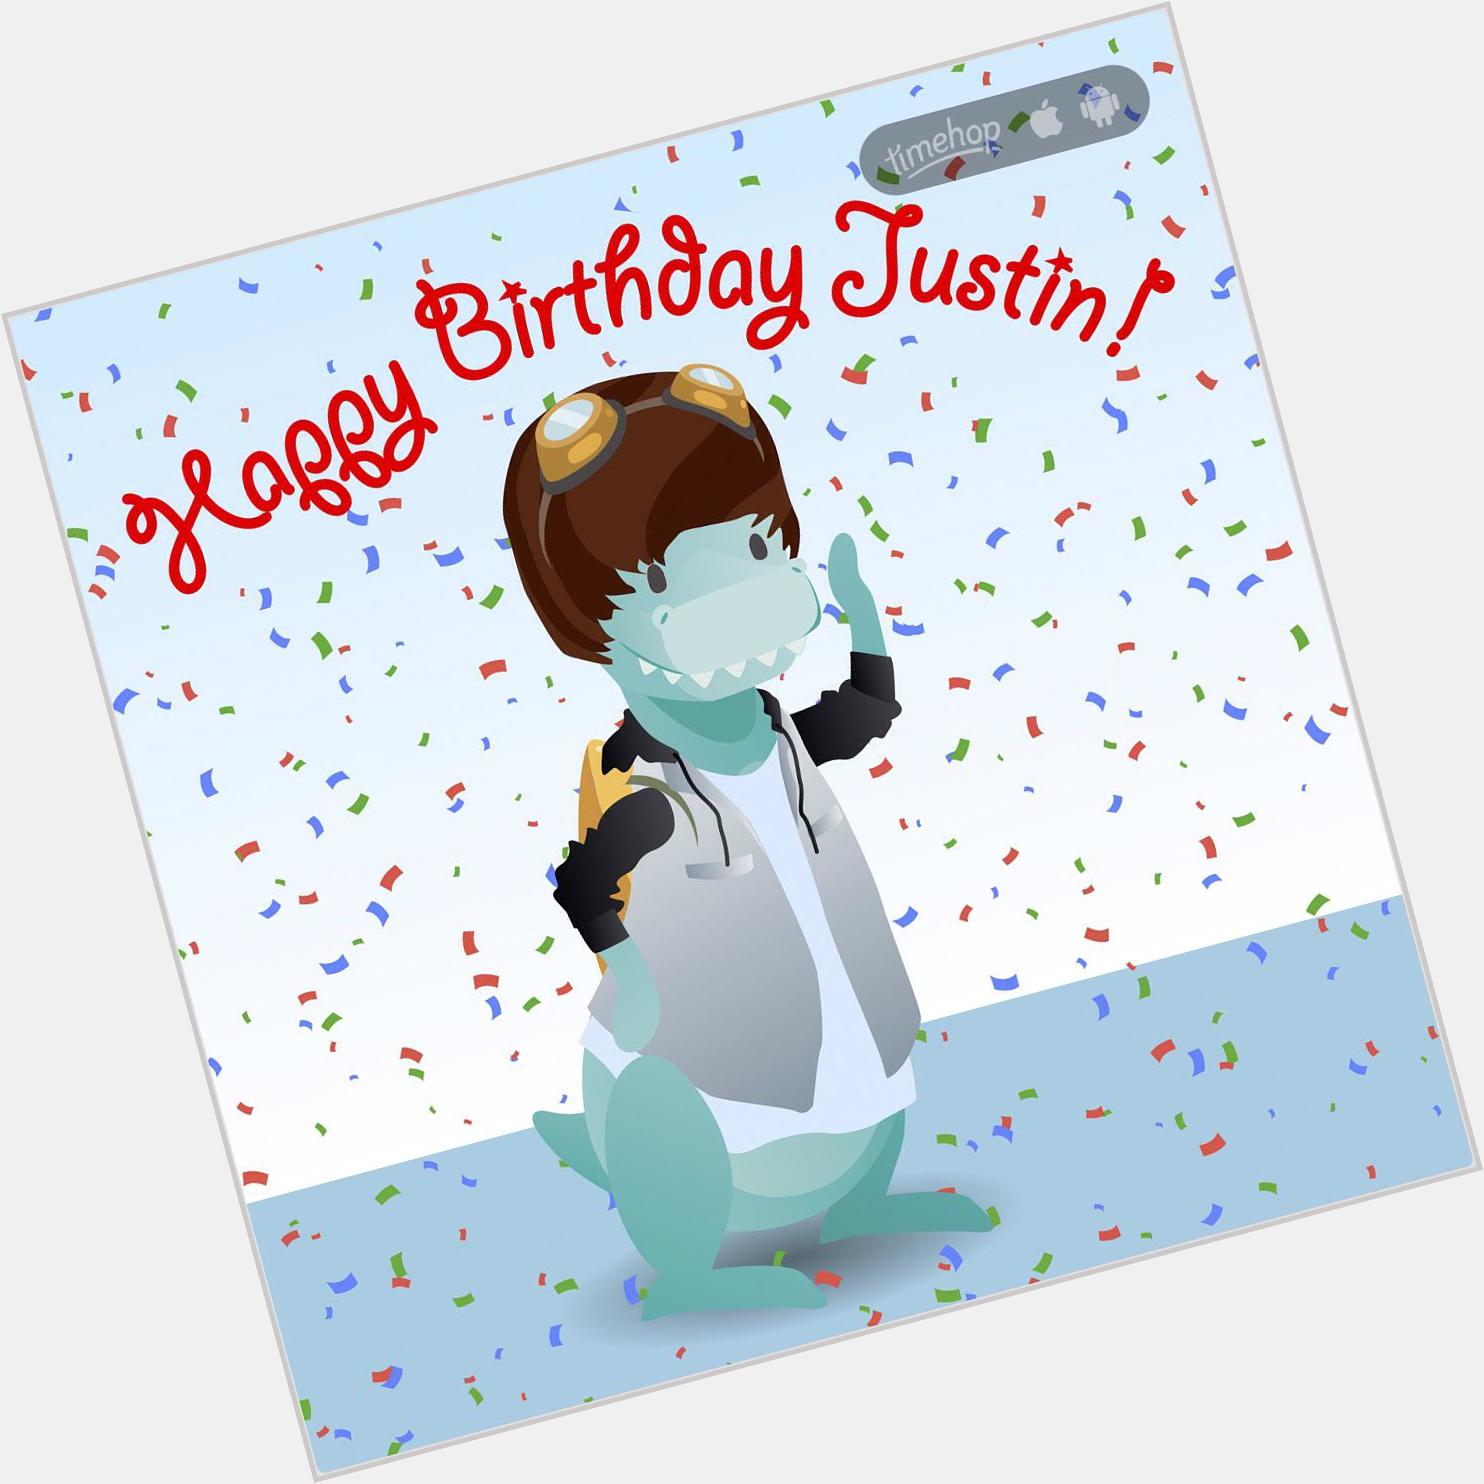 Happy Birthday to Justin Bieber!  